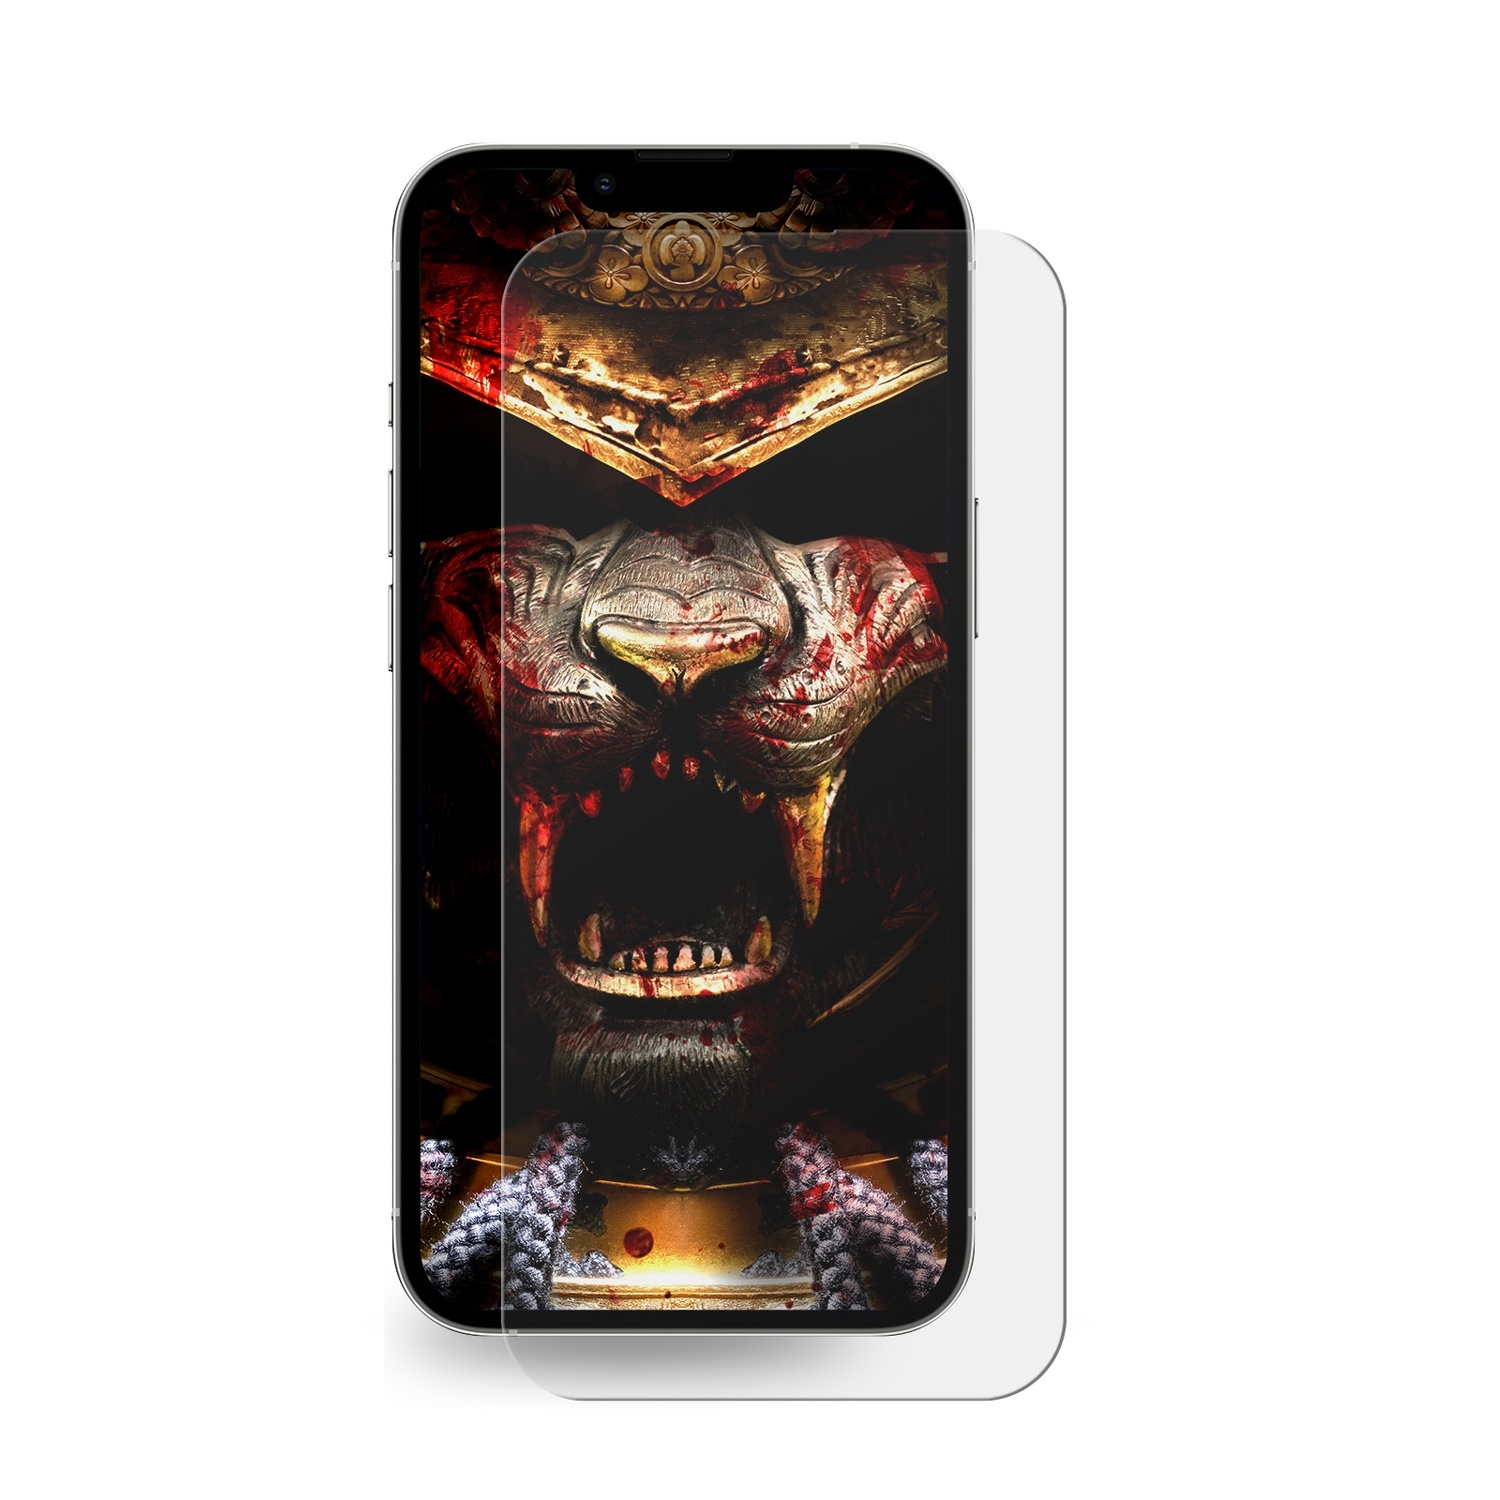 14 KLAR Premium iPhone Displayschutzfolie(für 4x PROTECTORKING Apple Schutzfolie Pro) FULL 3D COVER